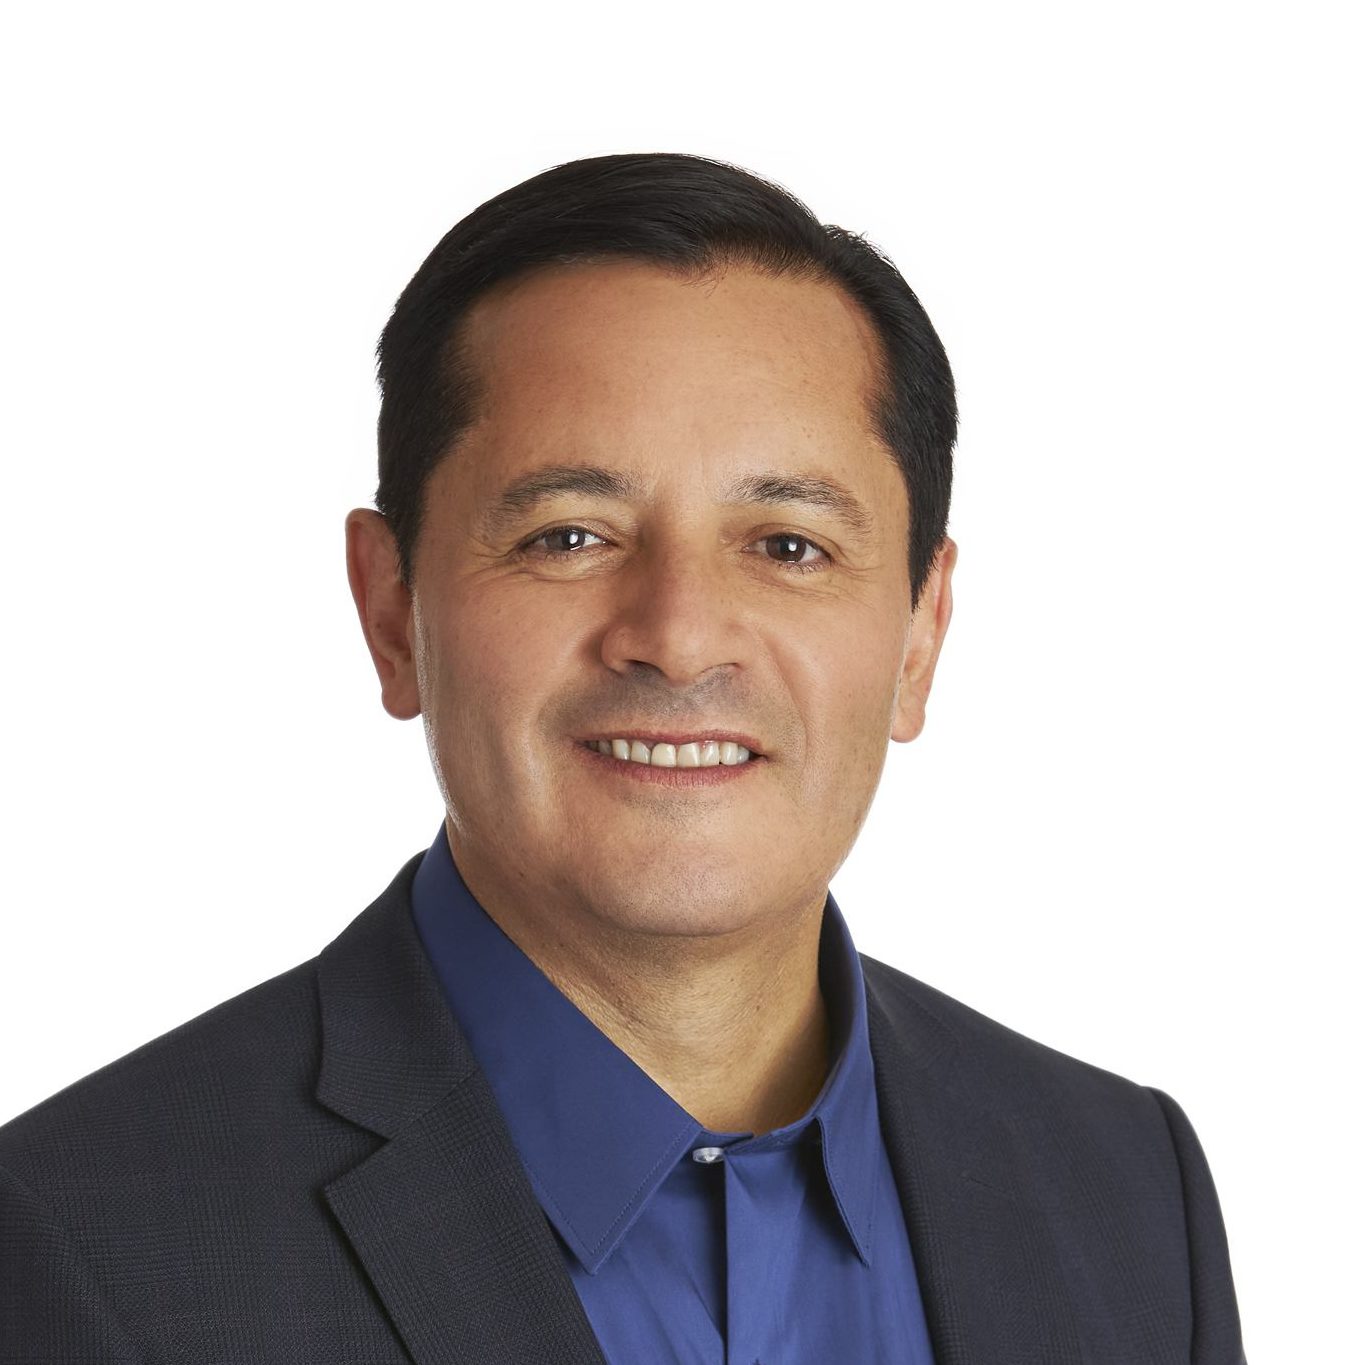 Jorge Pinedo, Executive Vice President, International